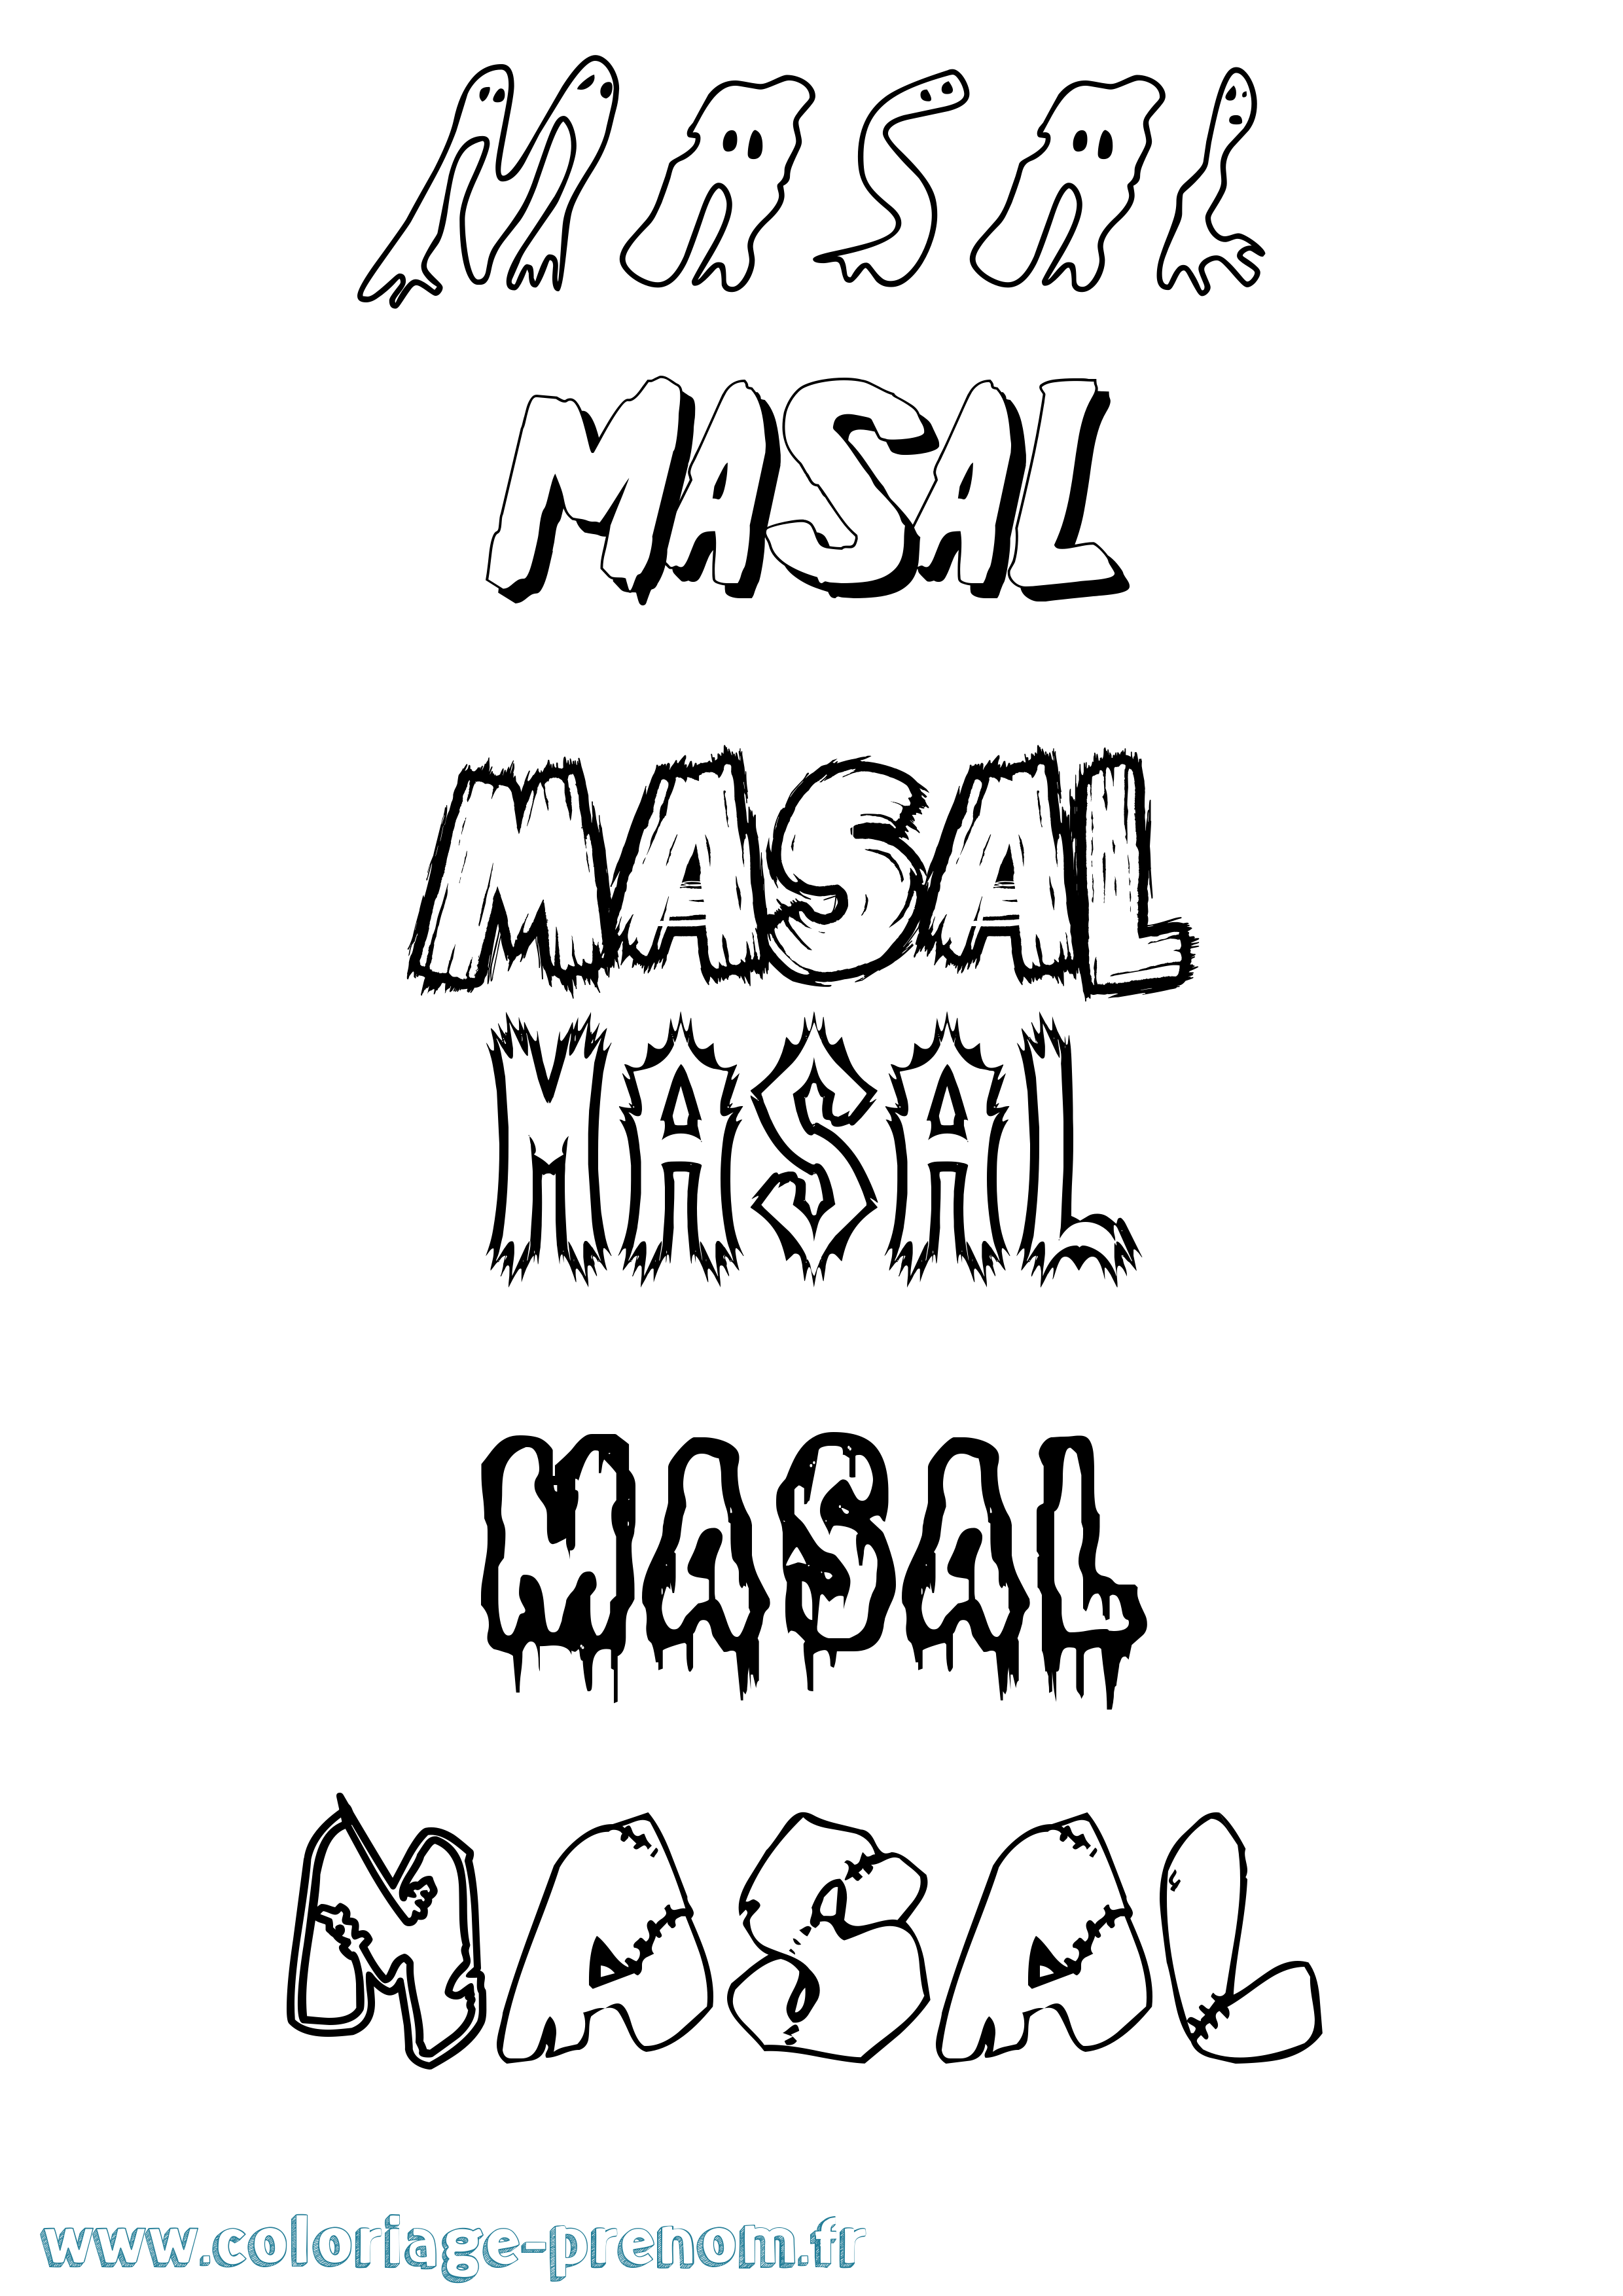 Coloriage prénom Masal Frisson